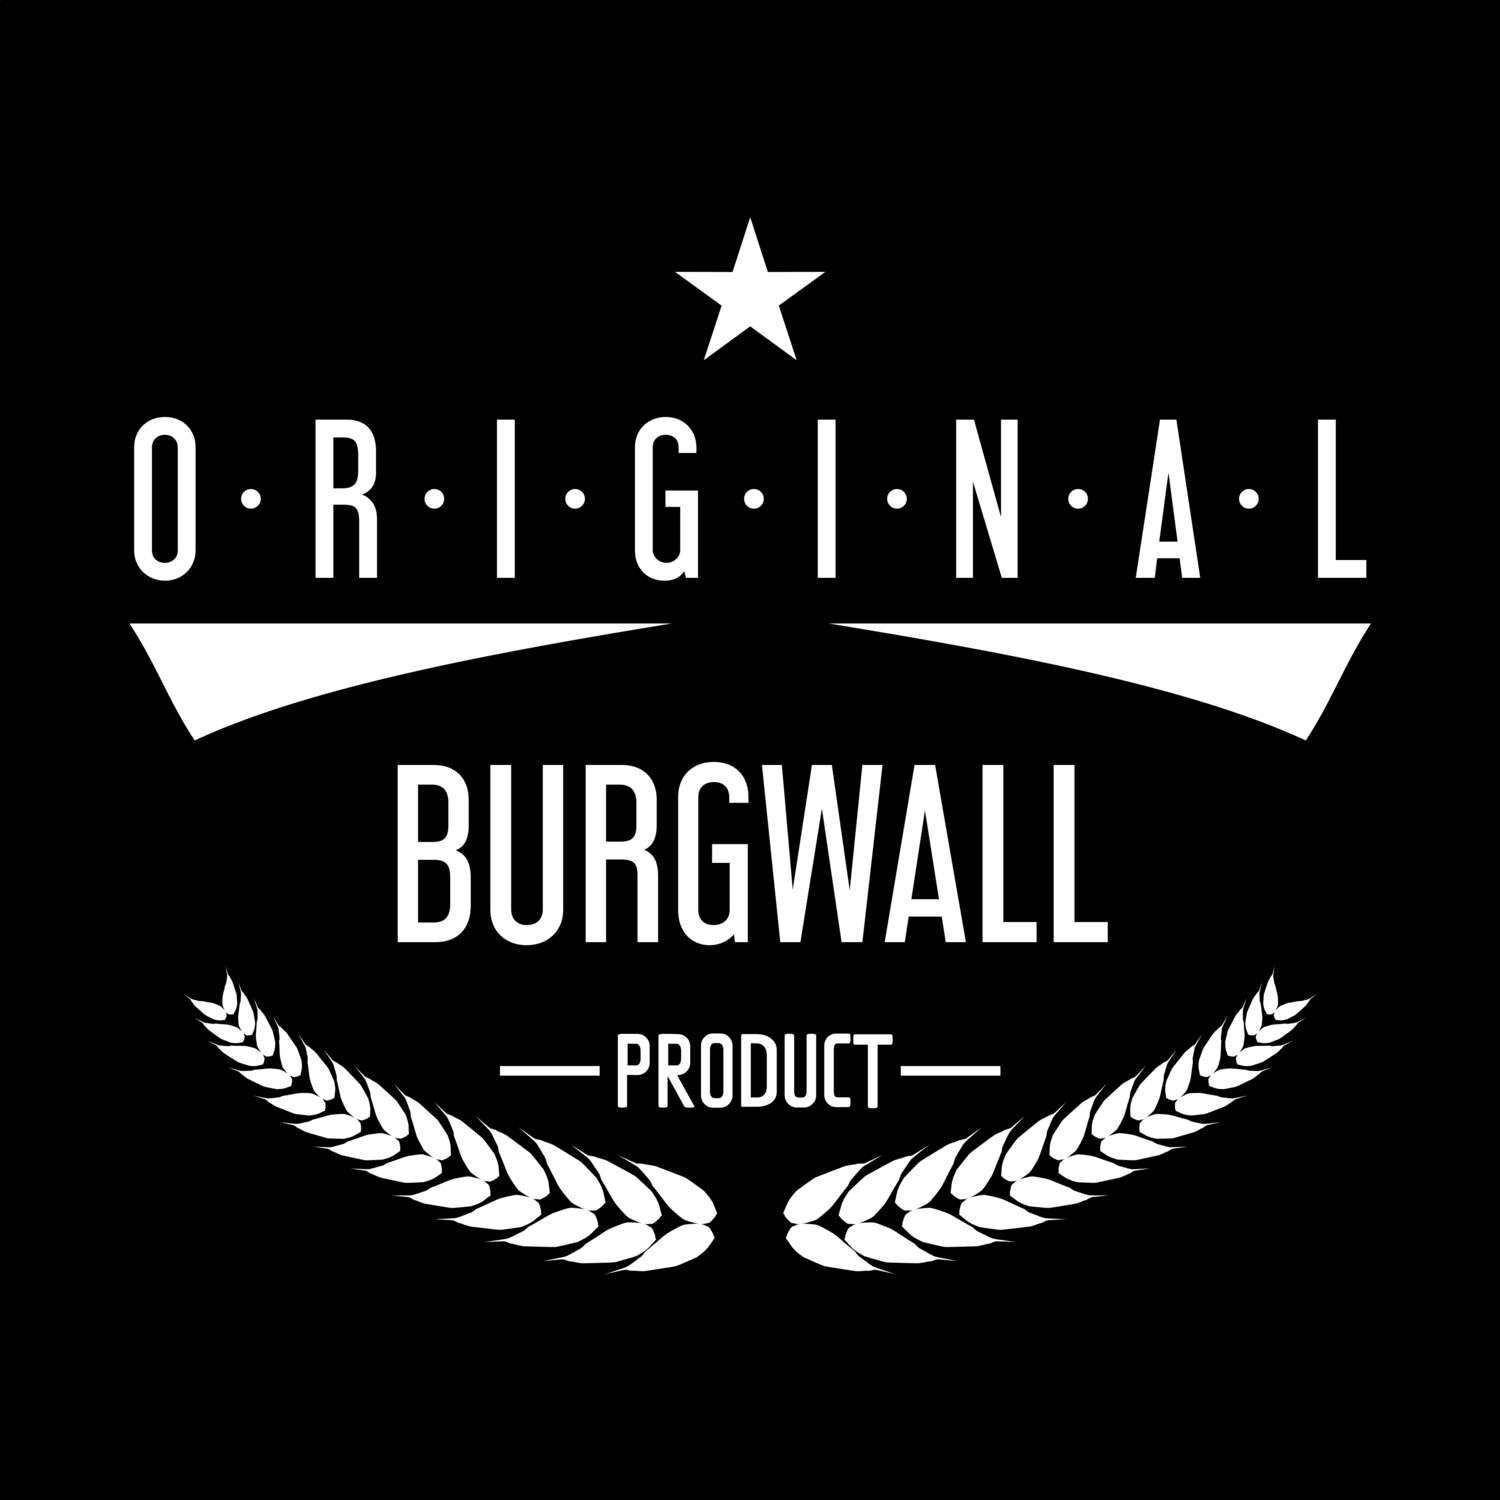 Burgwall T-Shirt »Original Product«